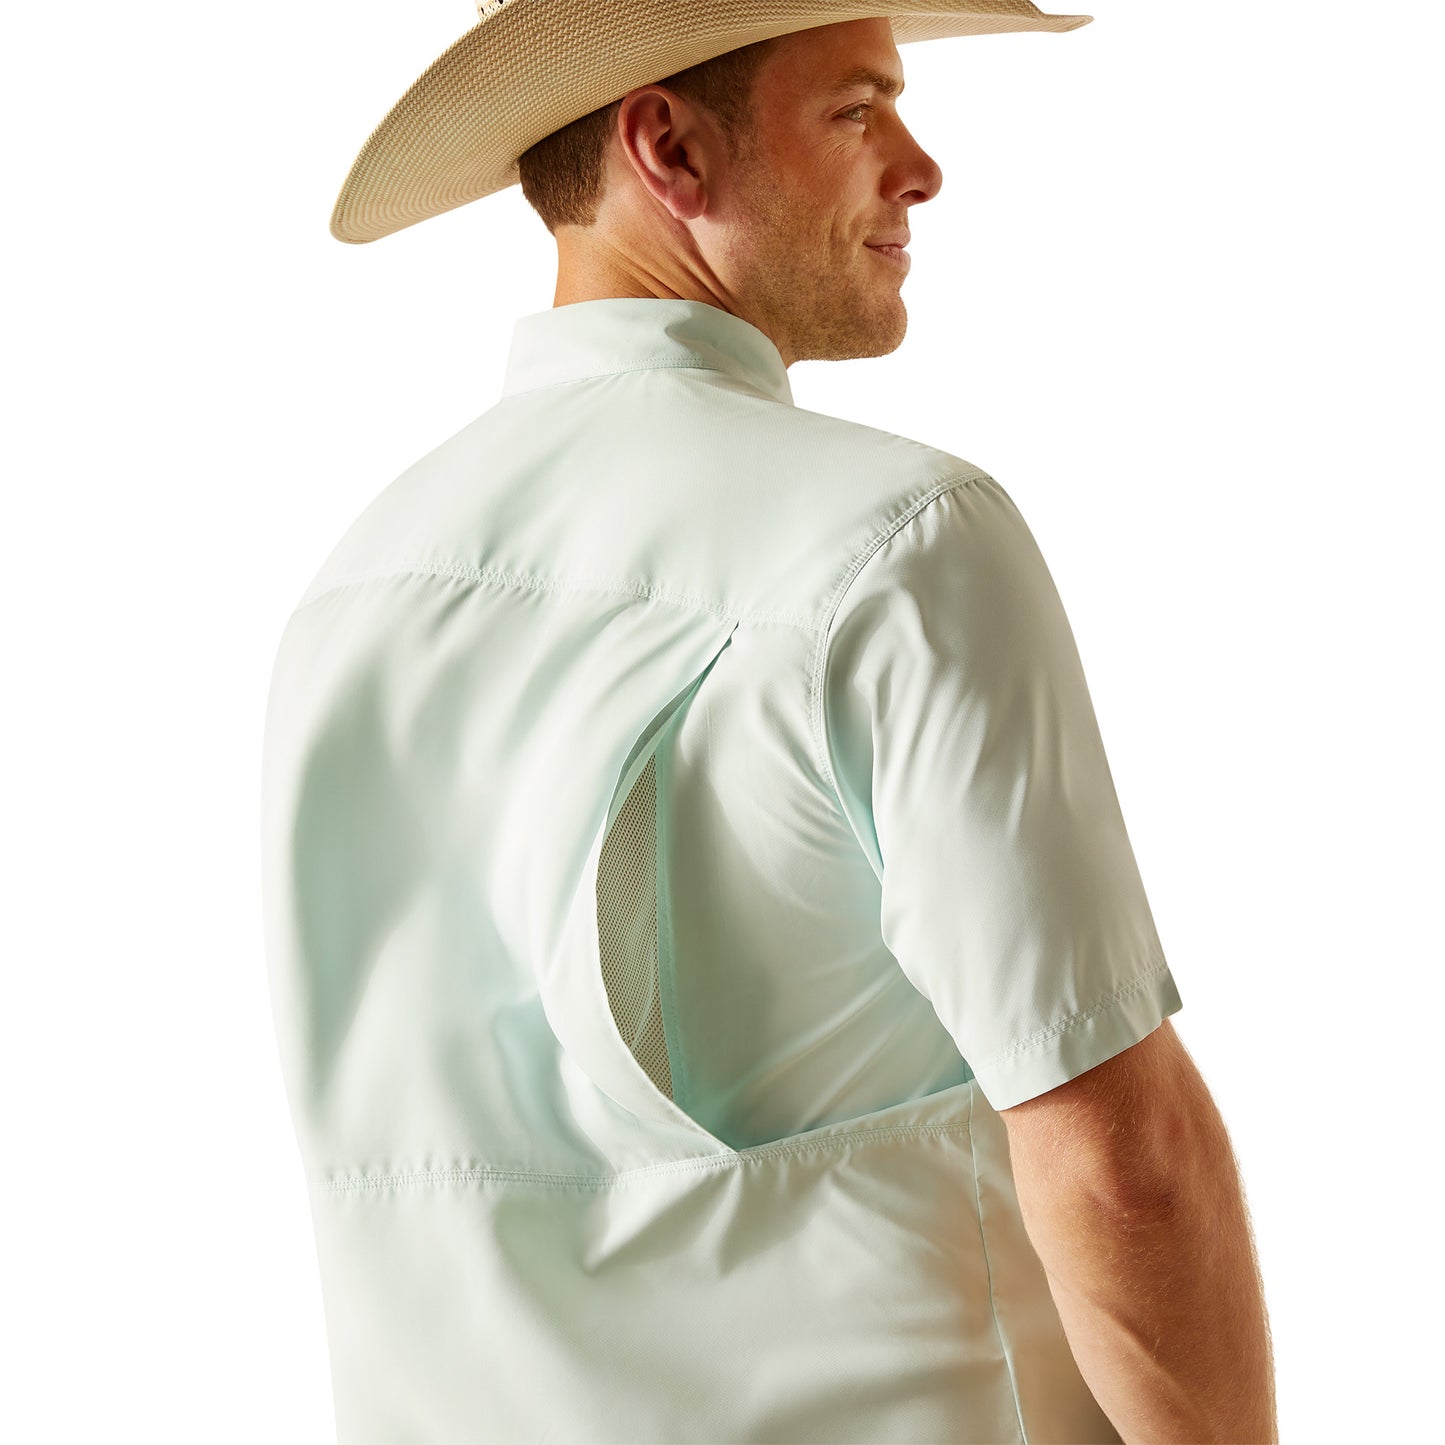 Ariat Men's VentTEK Outbound Classic Fit Bleached Aqua Shirt 10051319